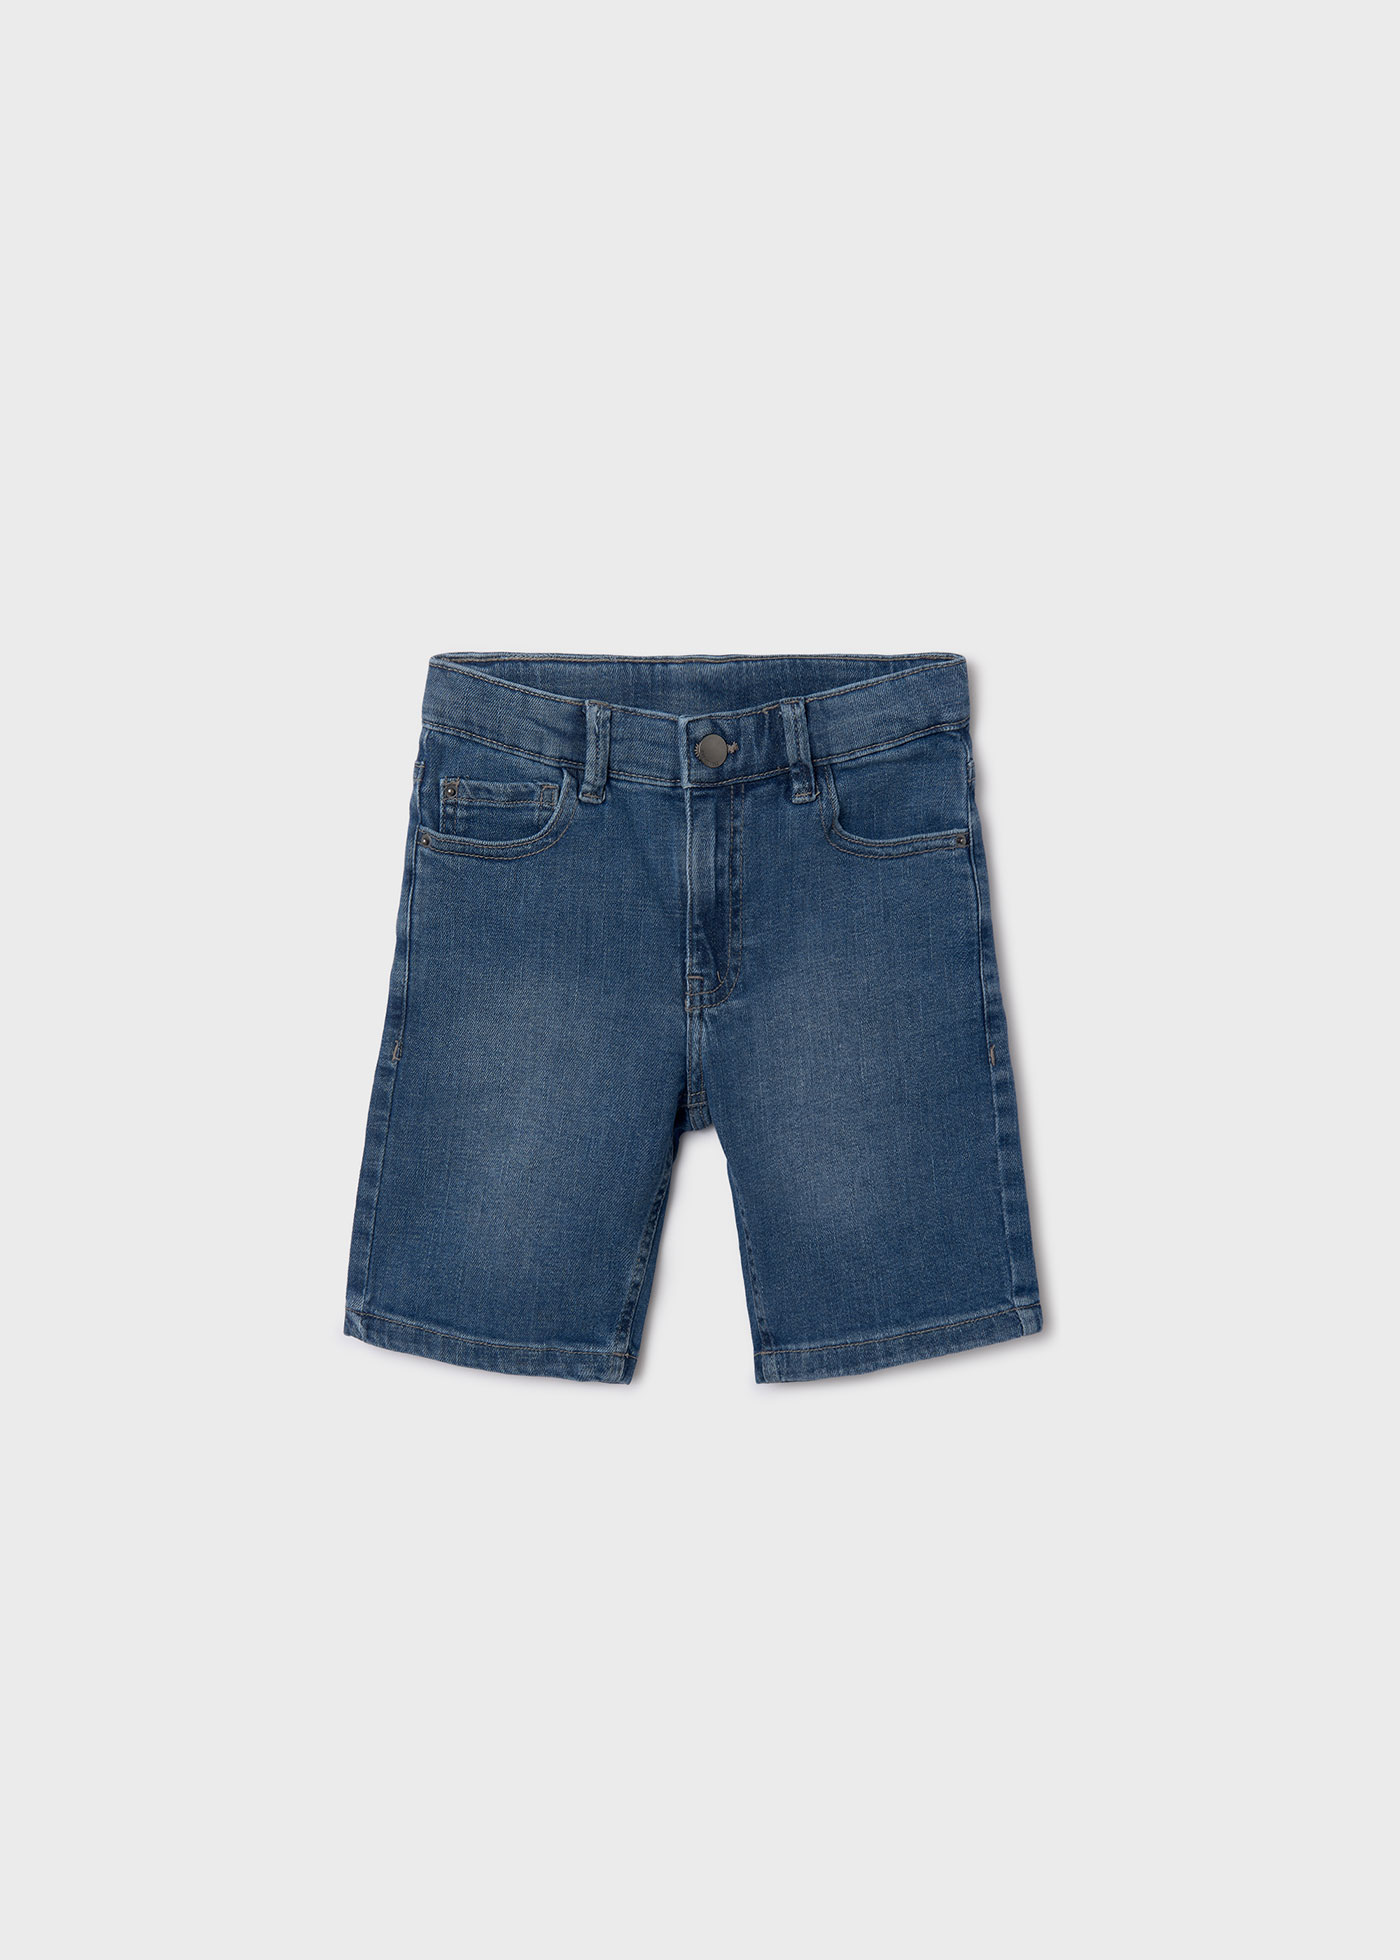 Boys denim shorts Better Cotton